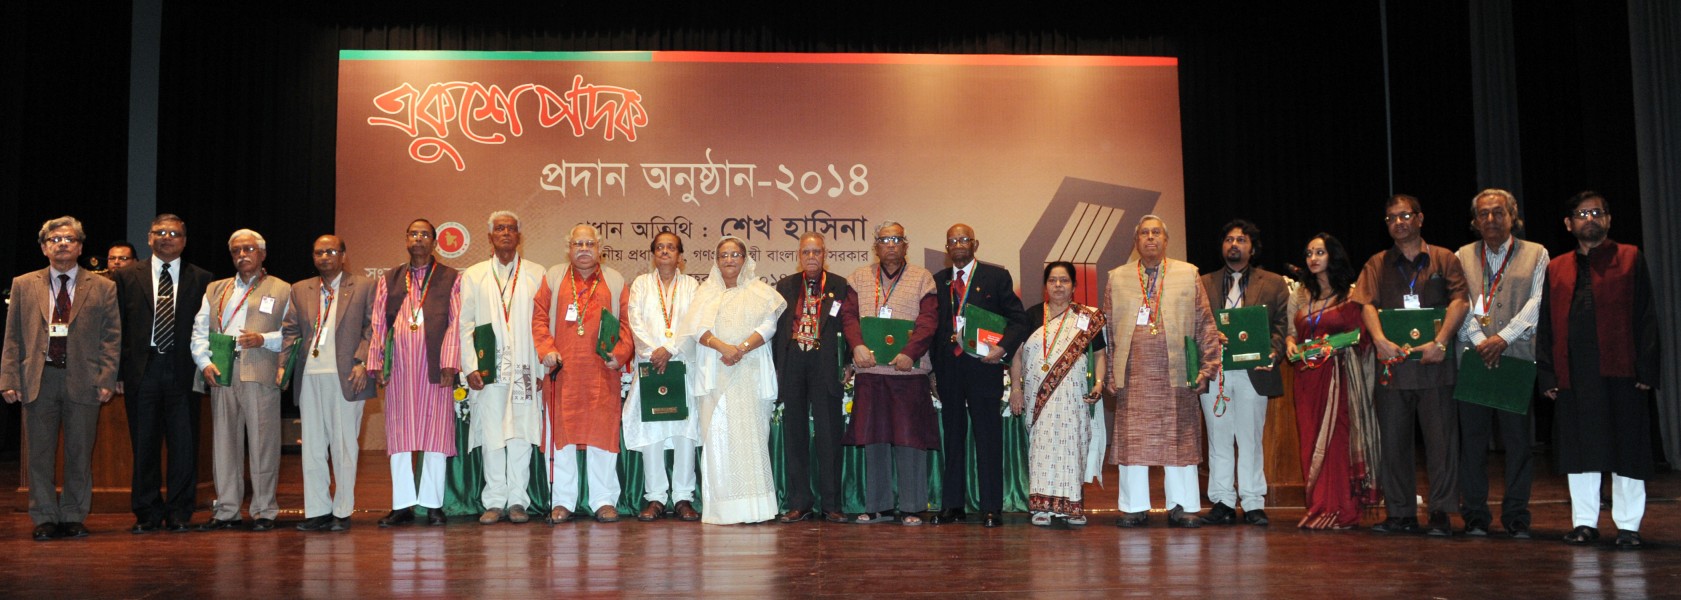 Prime Minister Sheikh Hasina with the 2014 Ekushe prize winners 